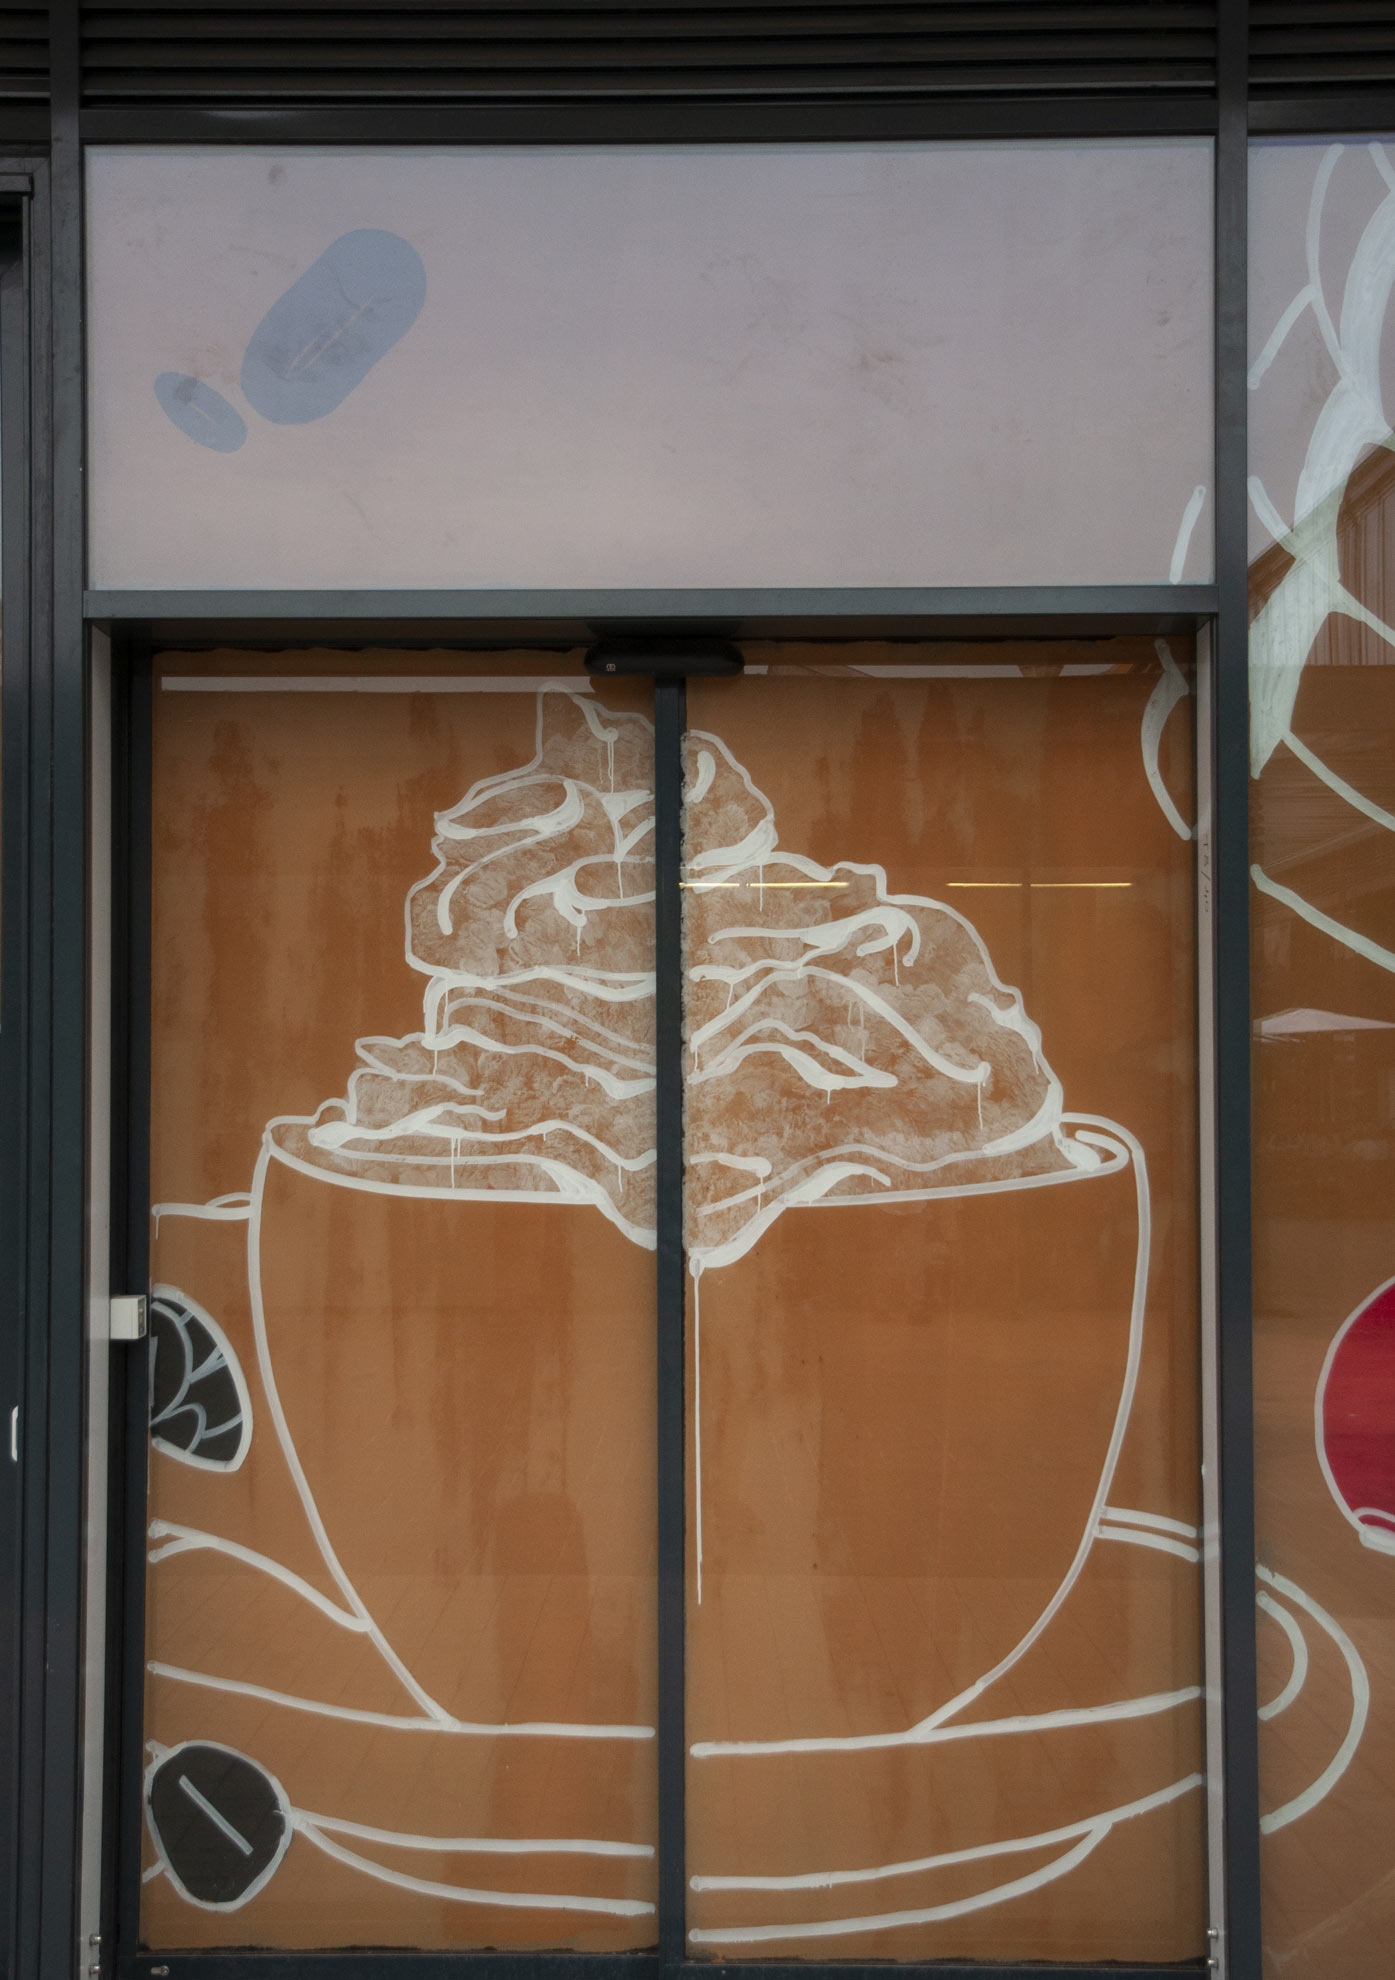 decoration ephemere vitrine cafe malongo ametist deco ephemere verre peinture lavable